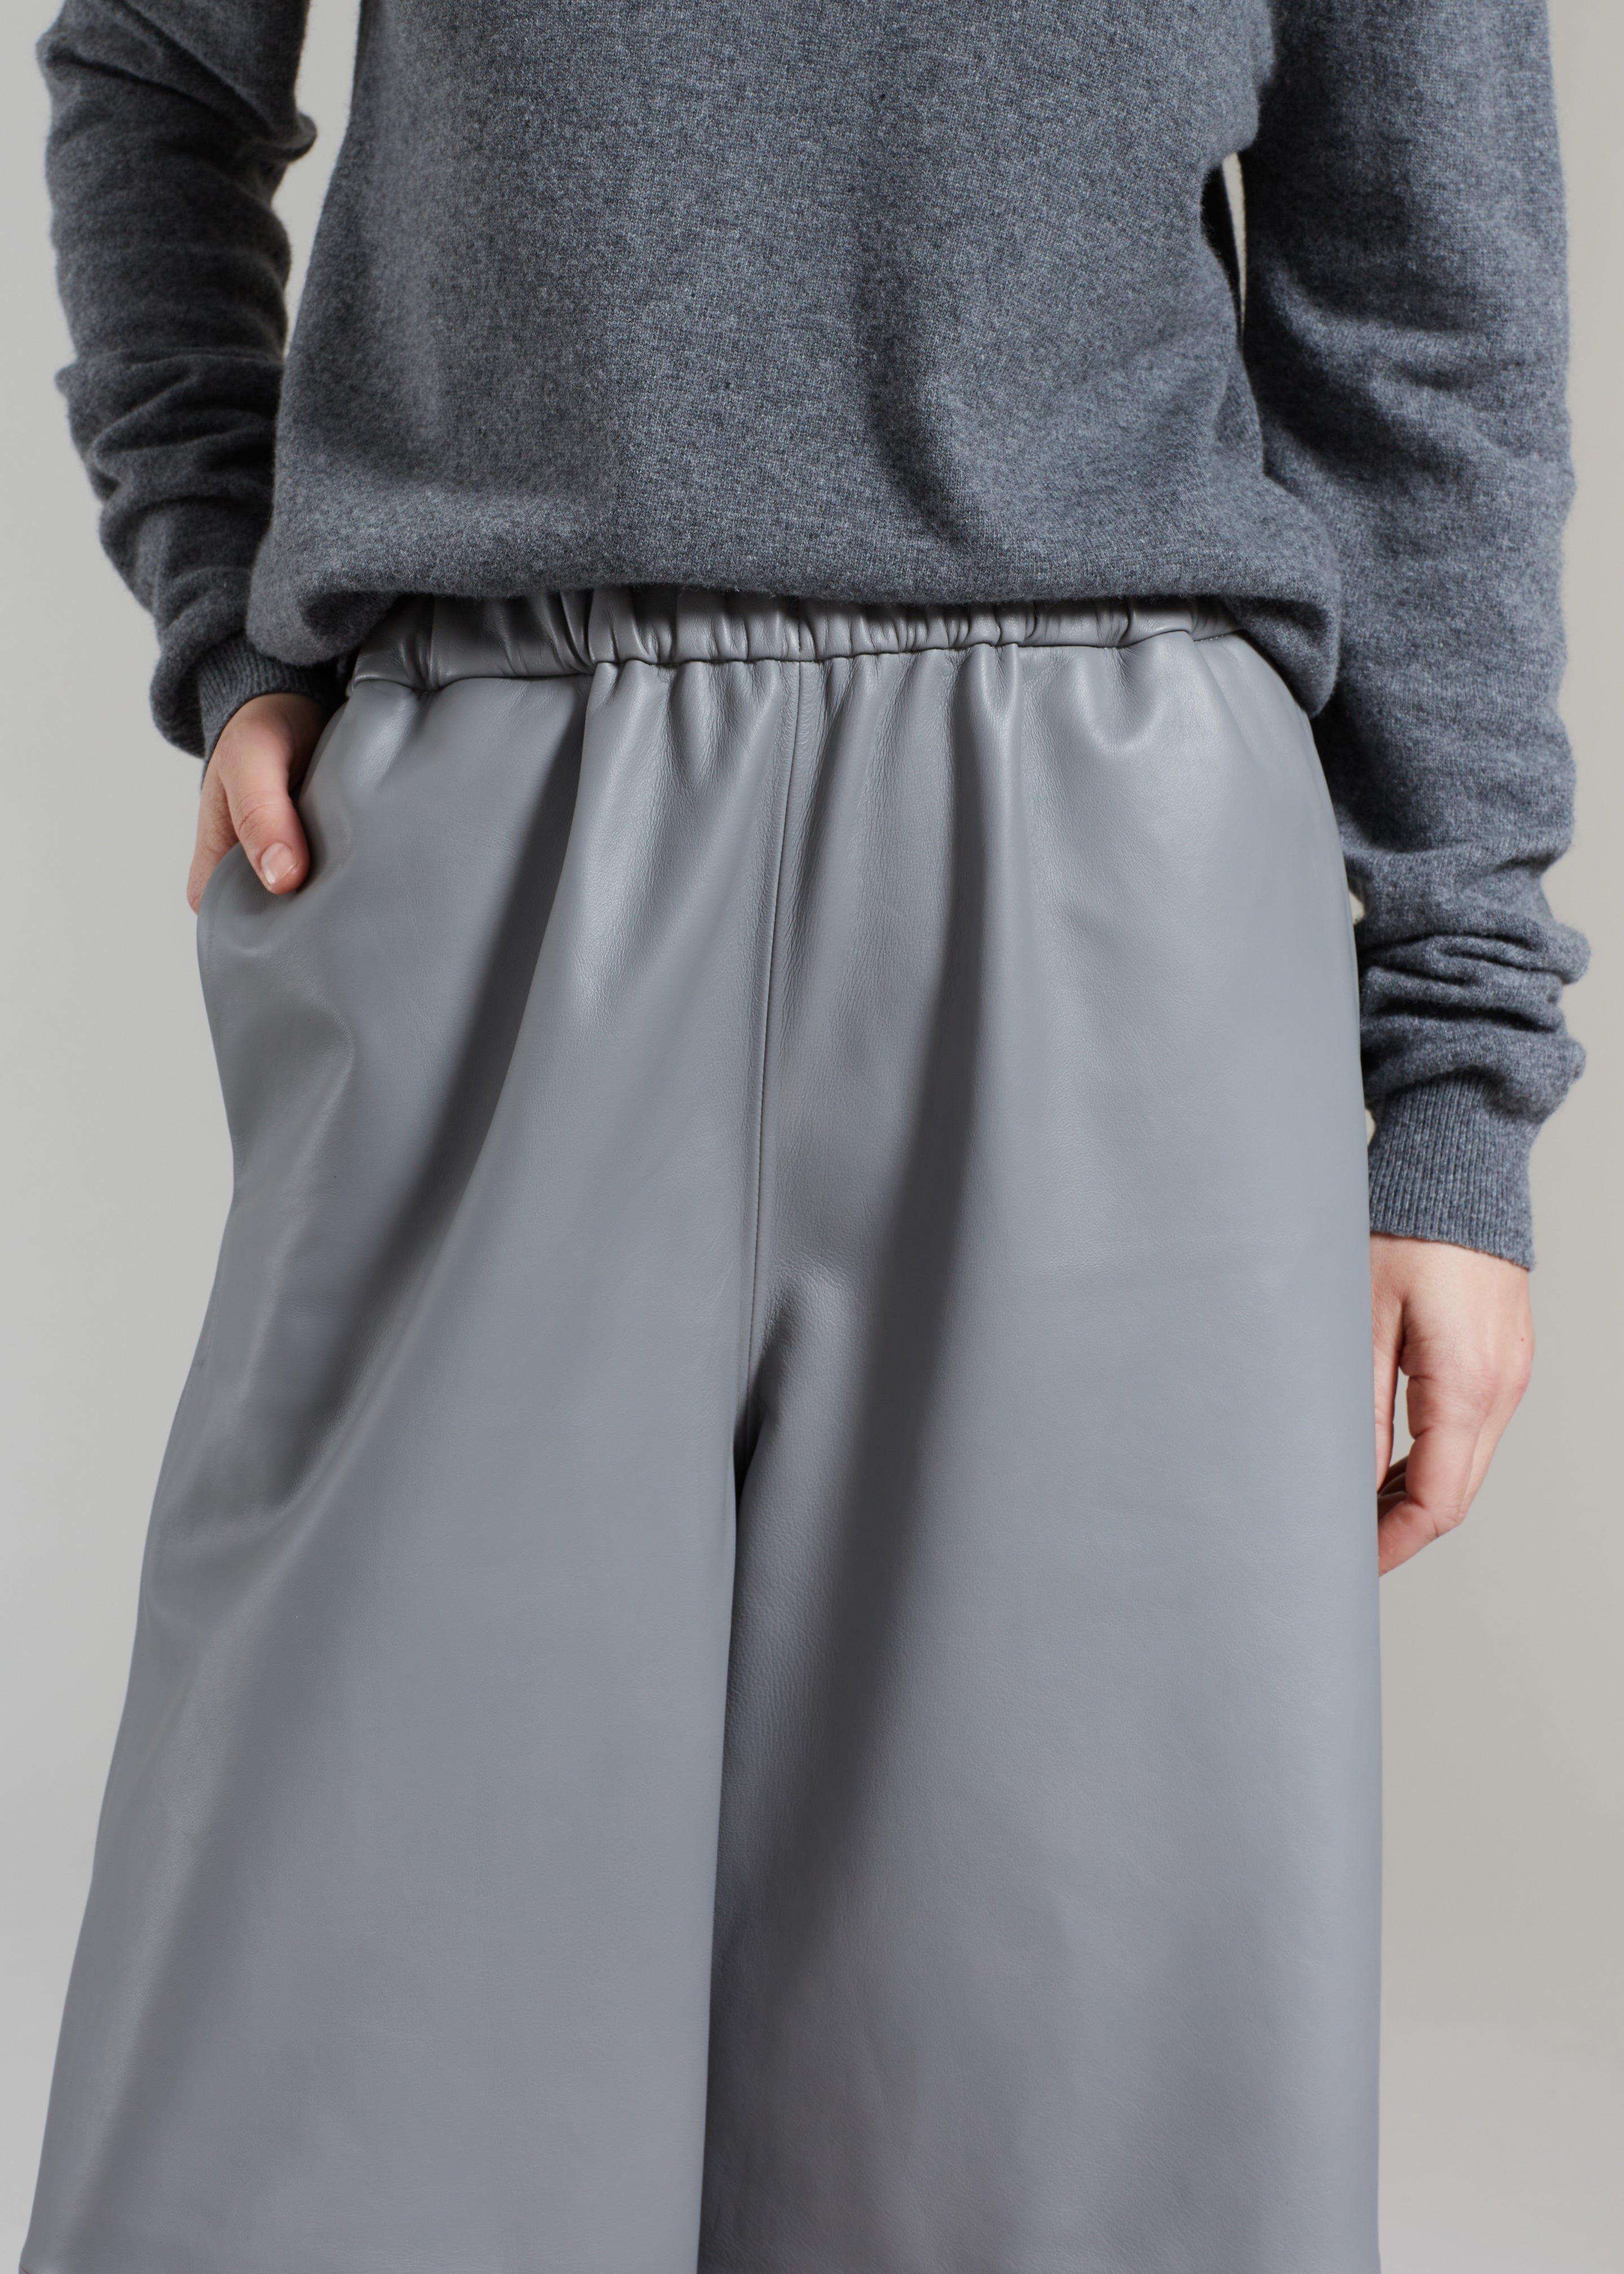 Sydney Wide Leather Pants - Grey - 2